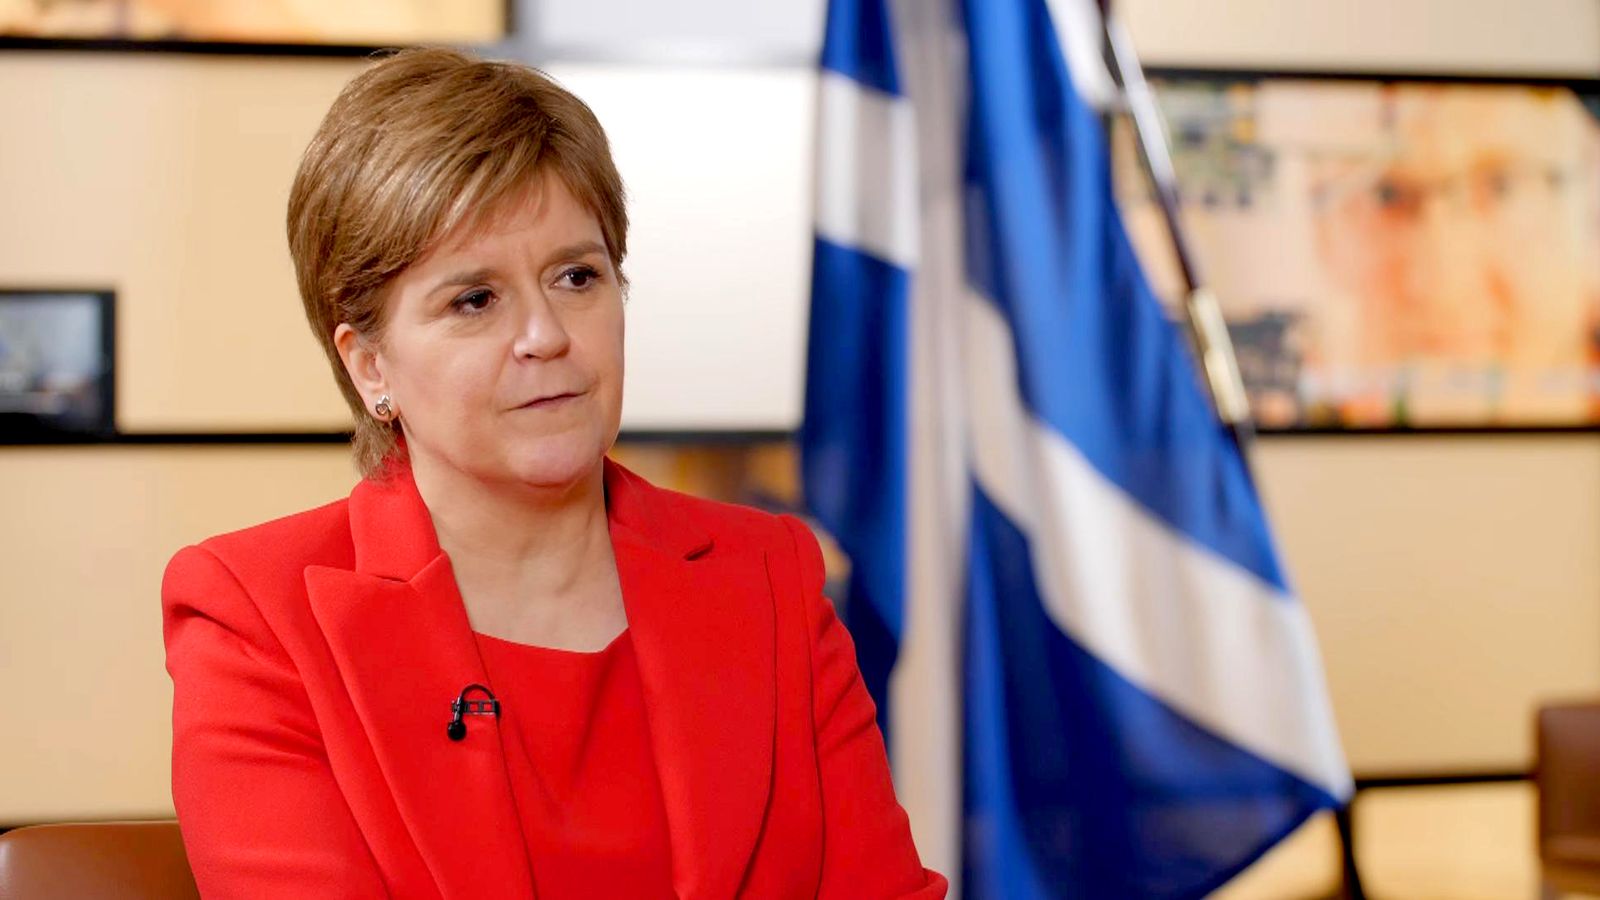 Nicola Sturgeon 'has not heard from police' over probe into SNP finances 